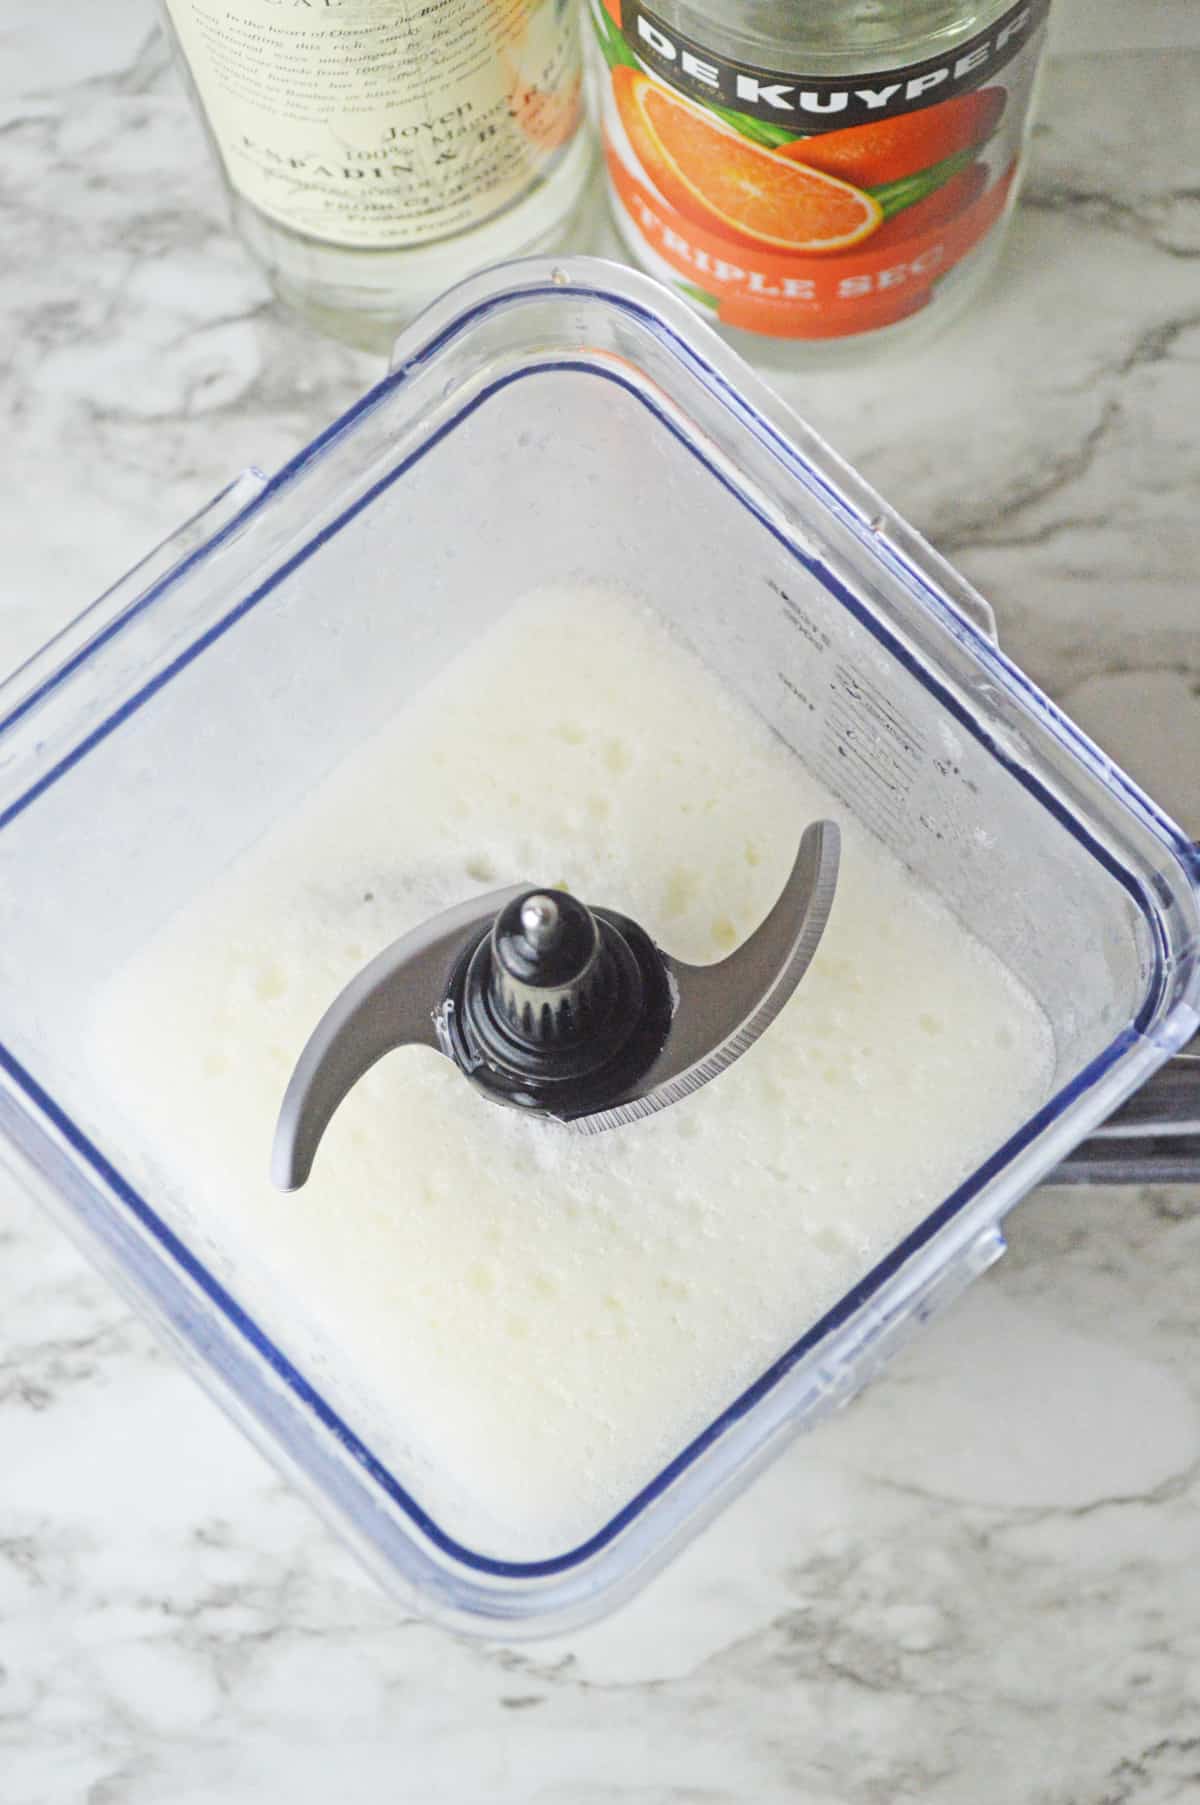 Ingredients for Frozen mezcal margarita in a blender on a white counter.